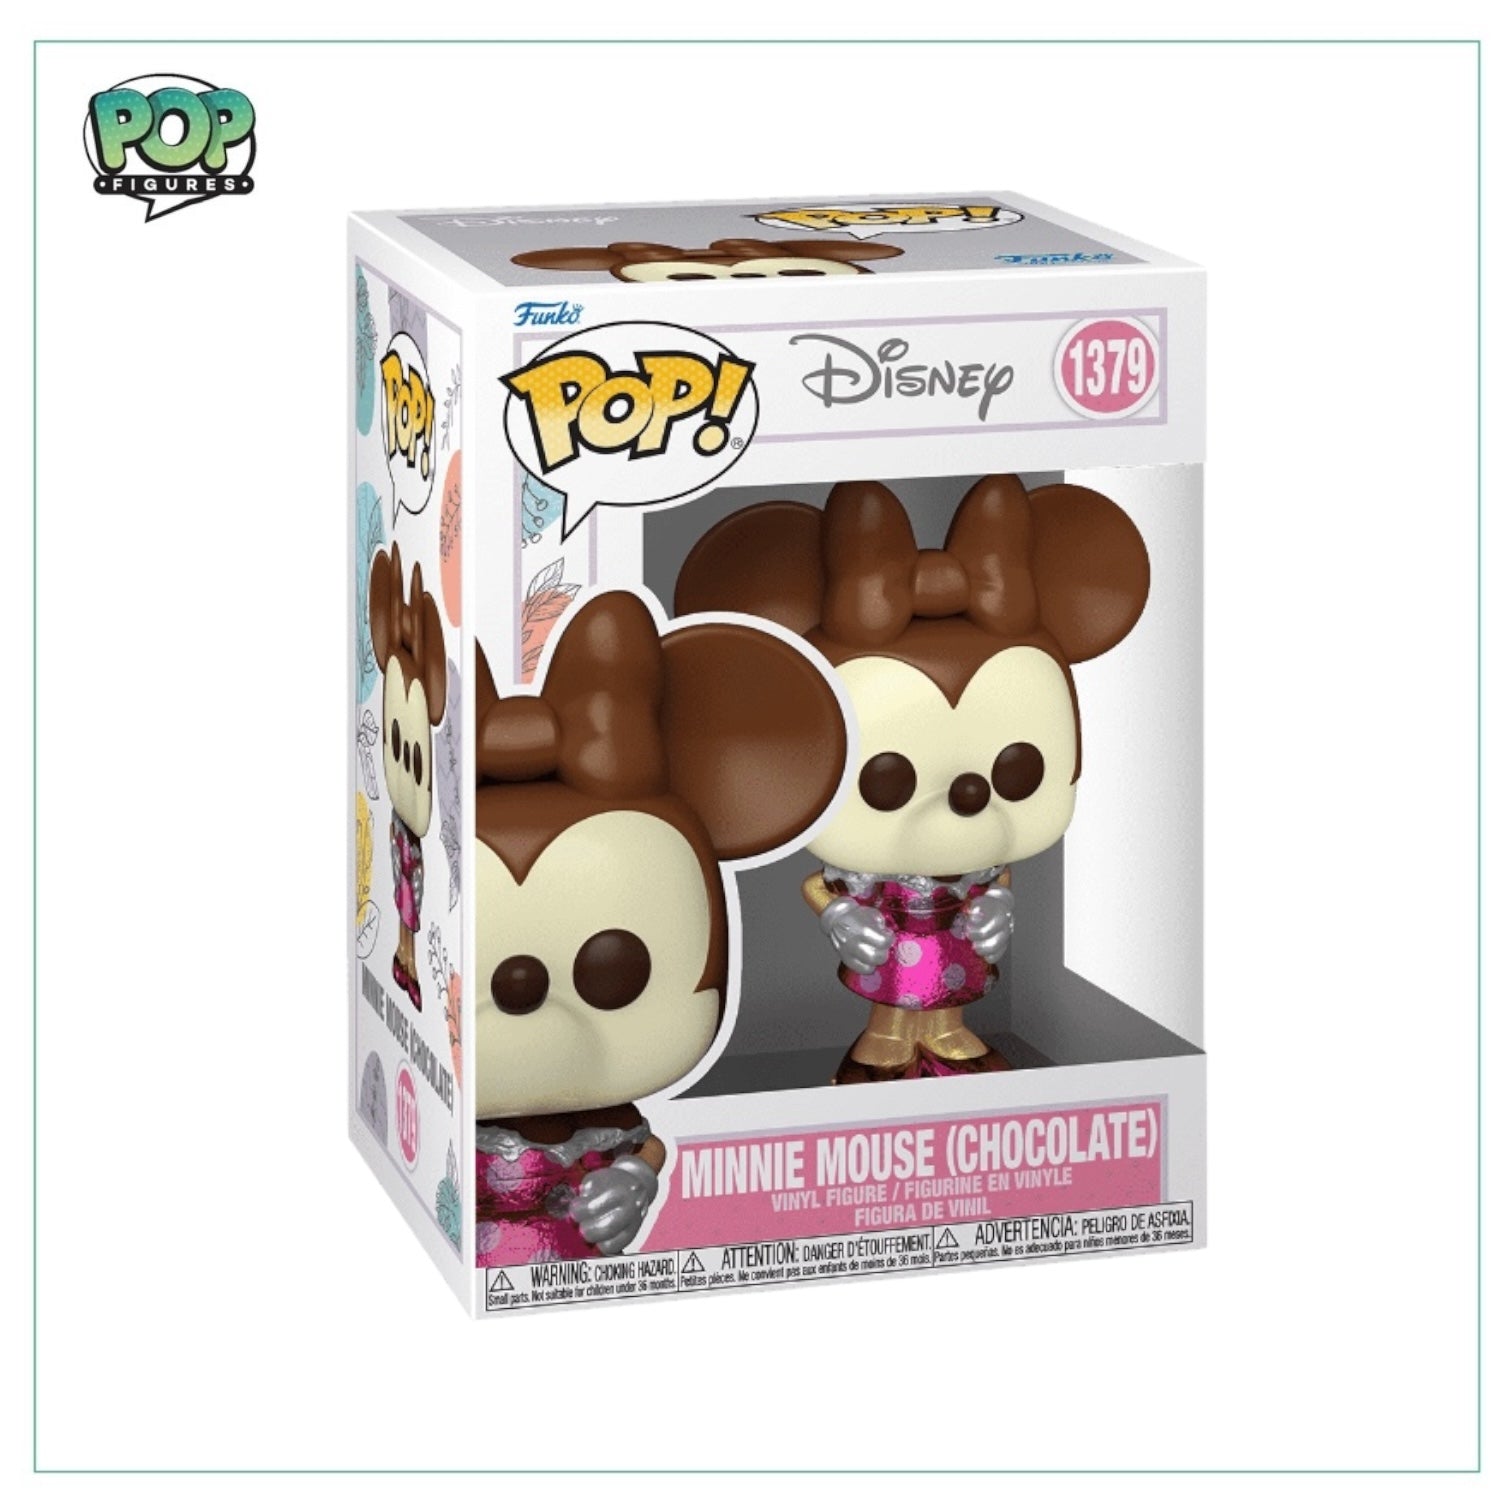 Minnie Mouse Chocolate #1379 Funko Pop! - Disney